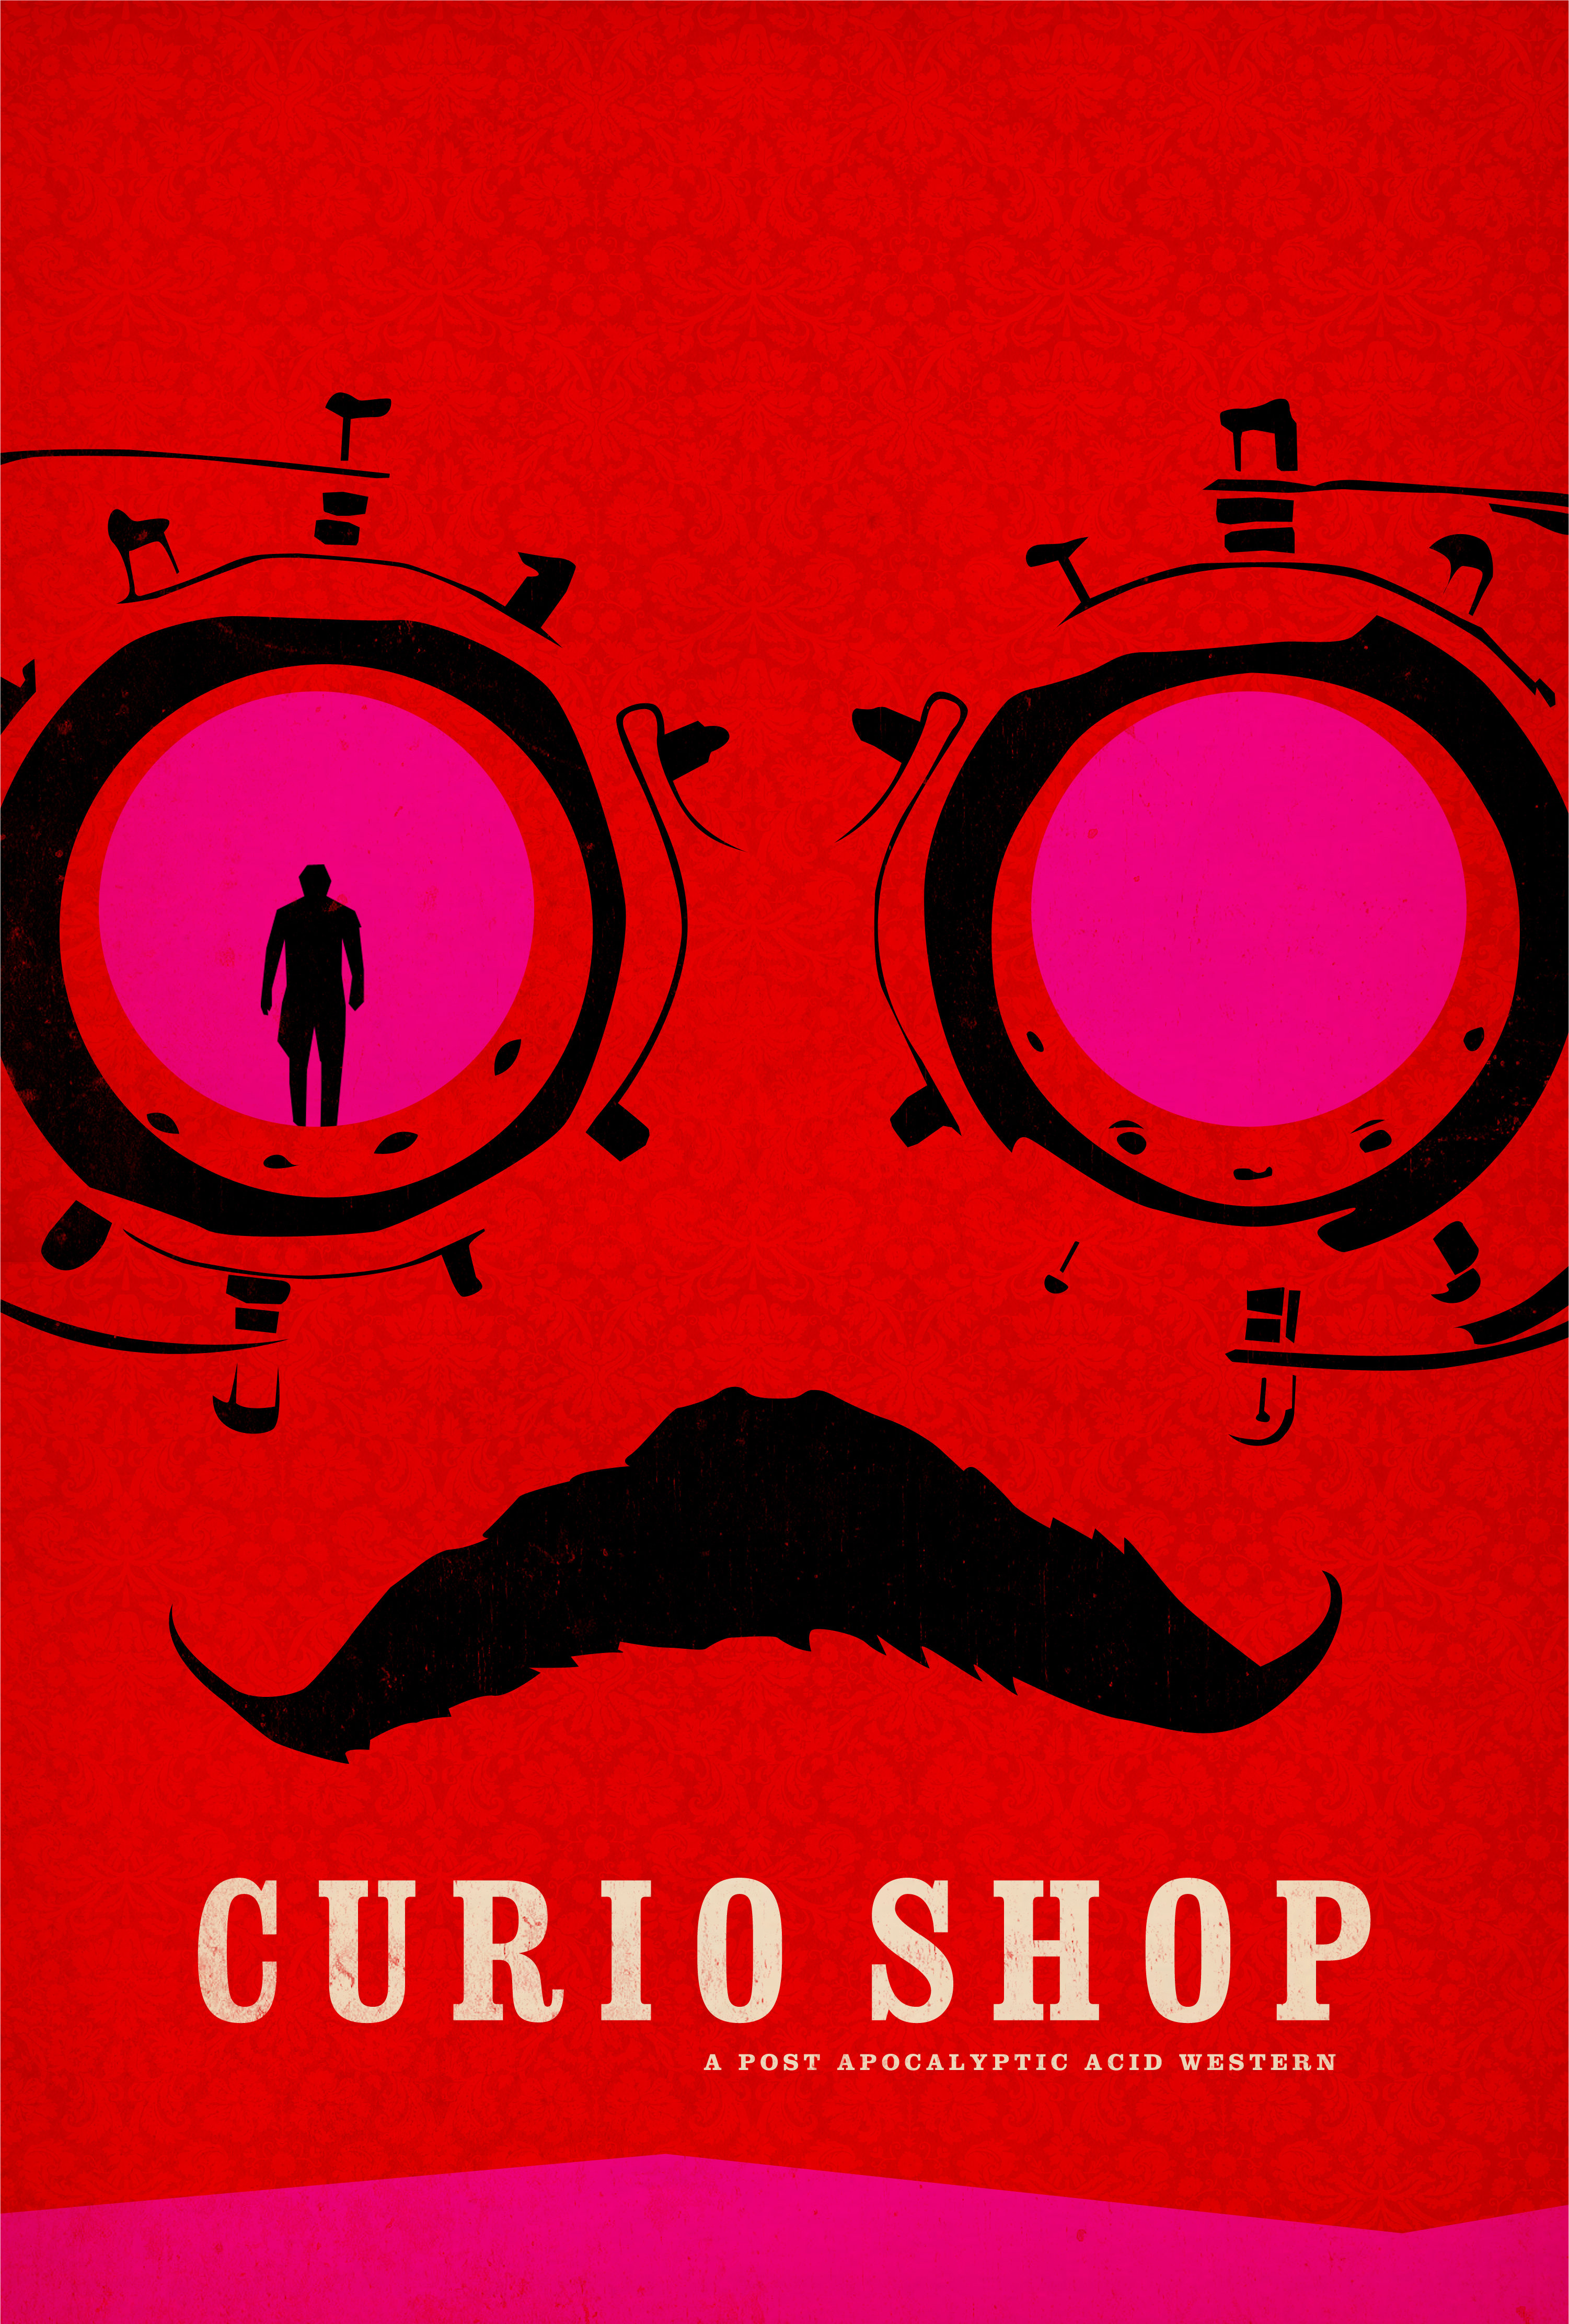 CURIO SHOP - George McWilliams poster #3